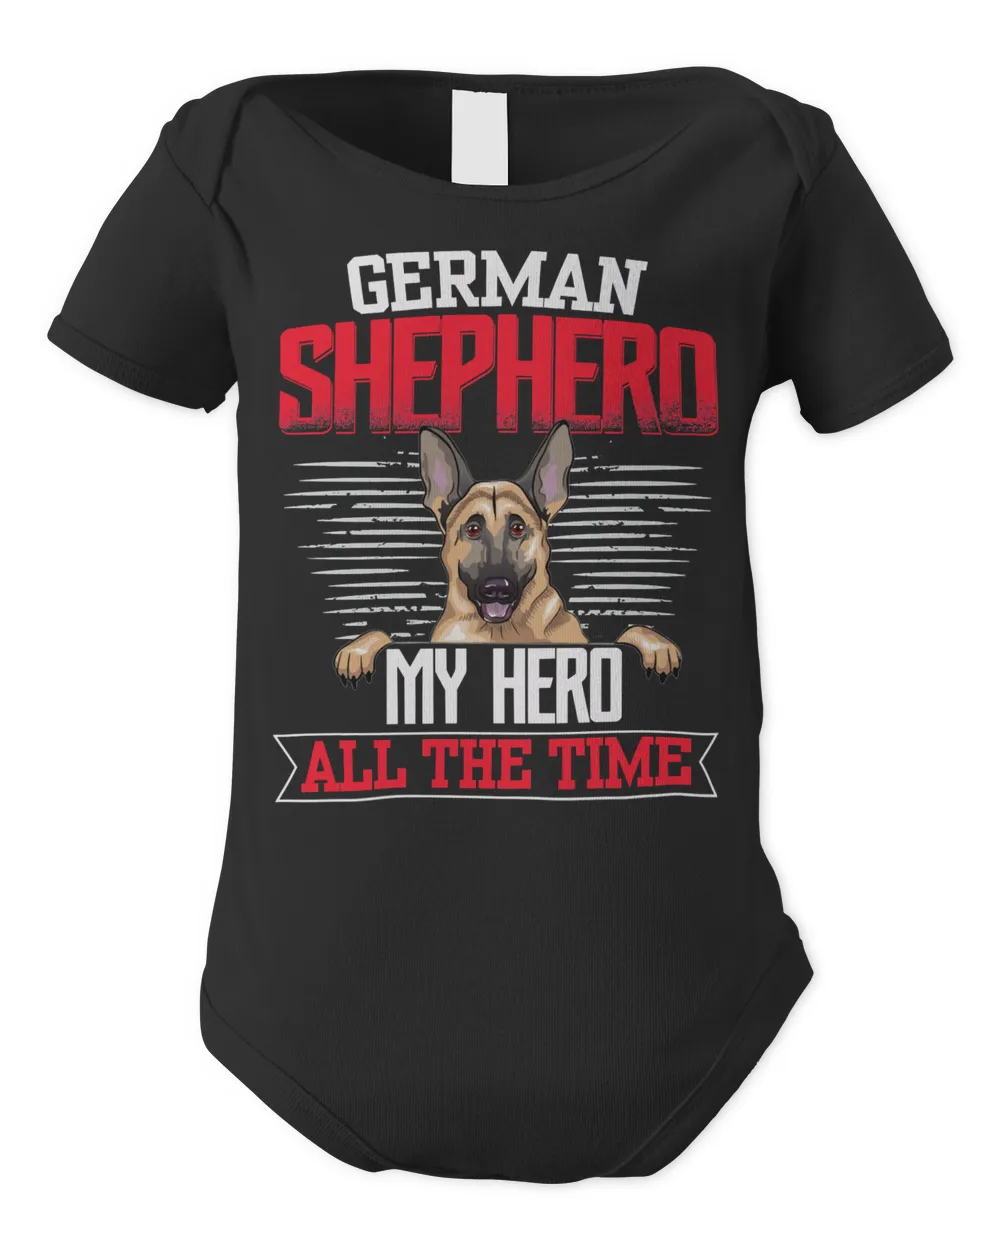 German Shepherd Dog German Shephero My Hero All Time41 paws